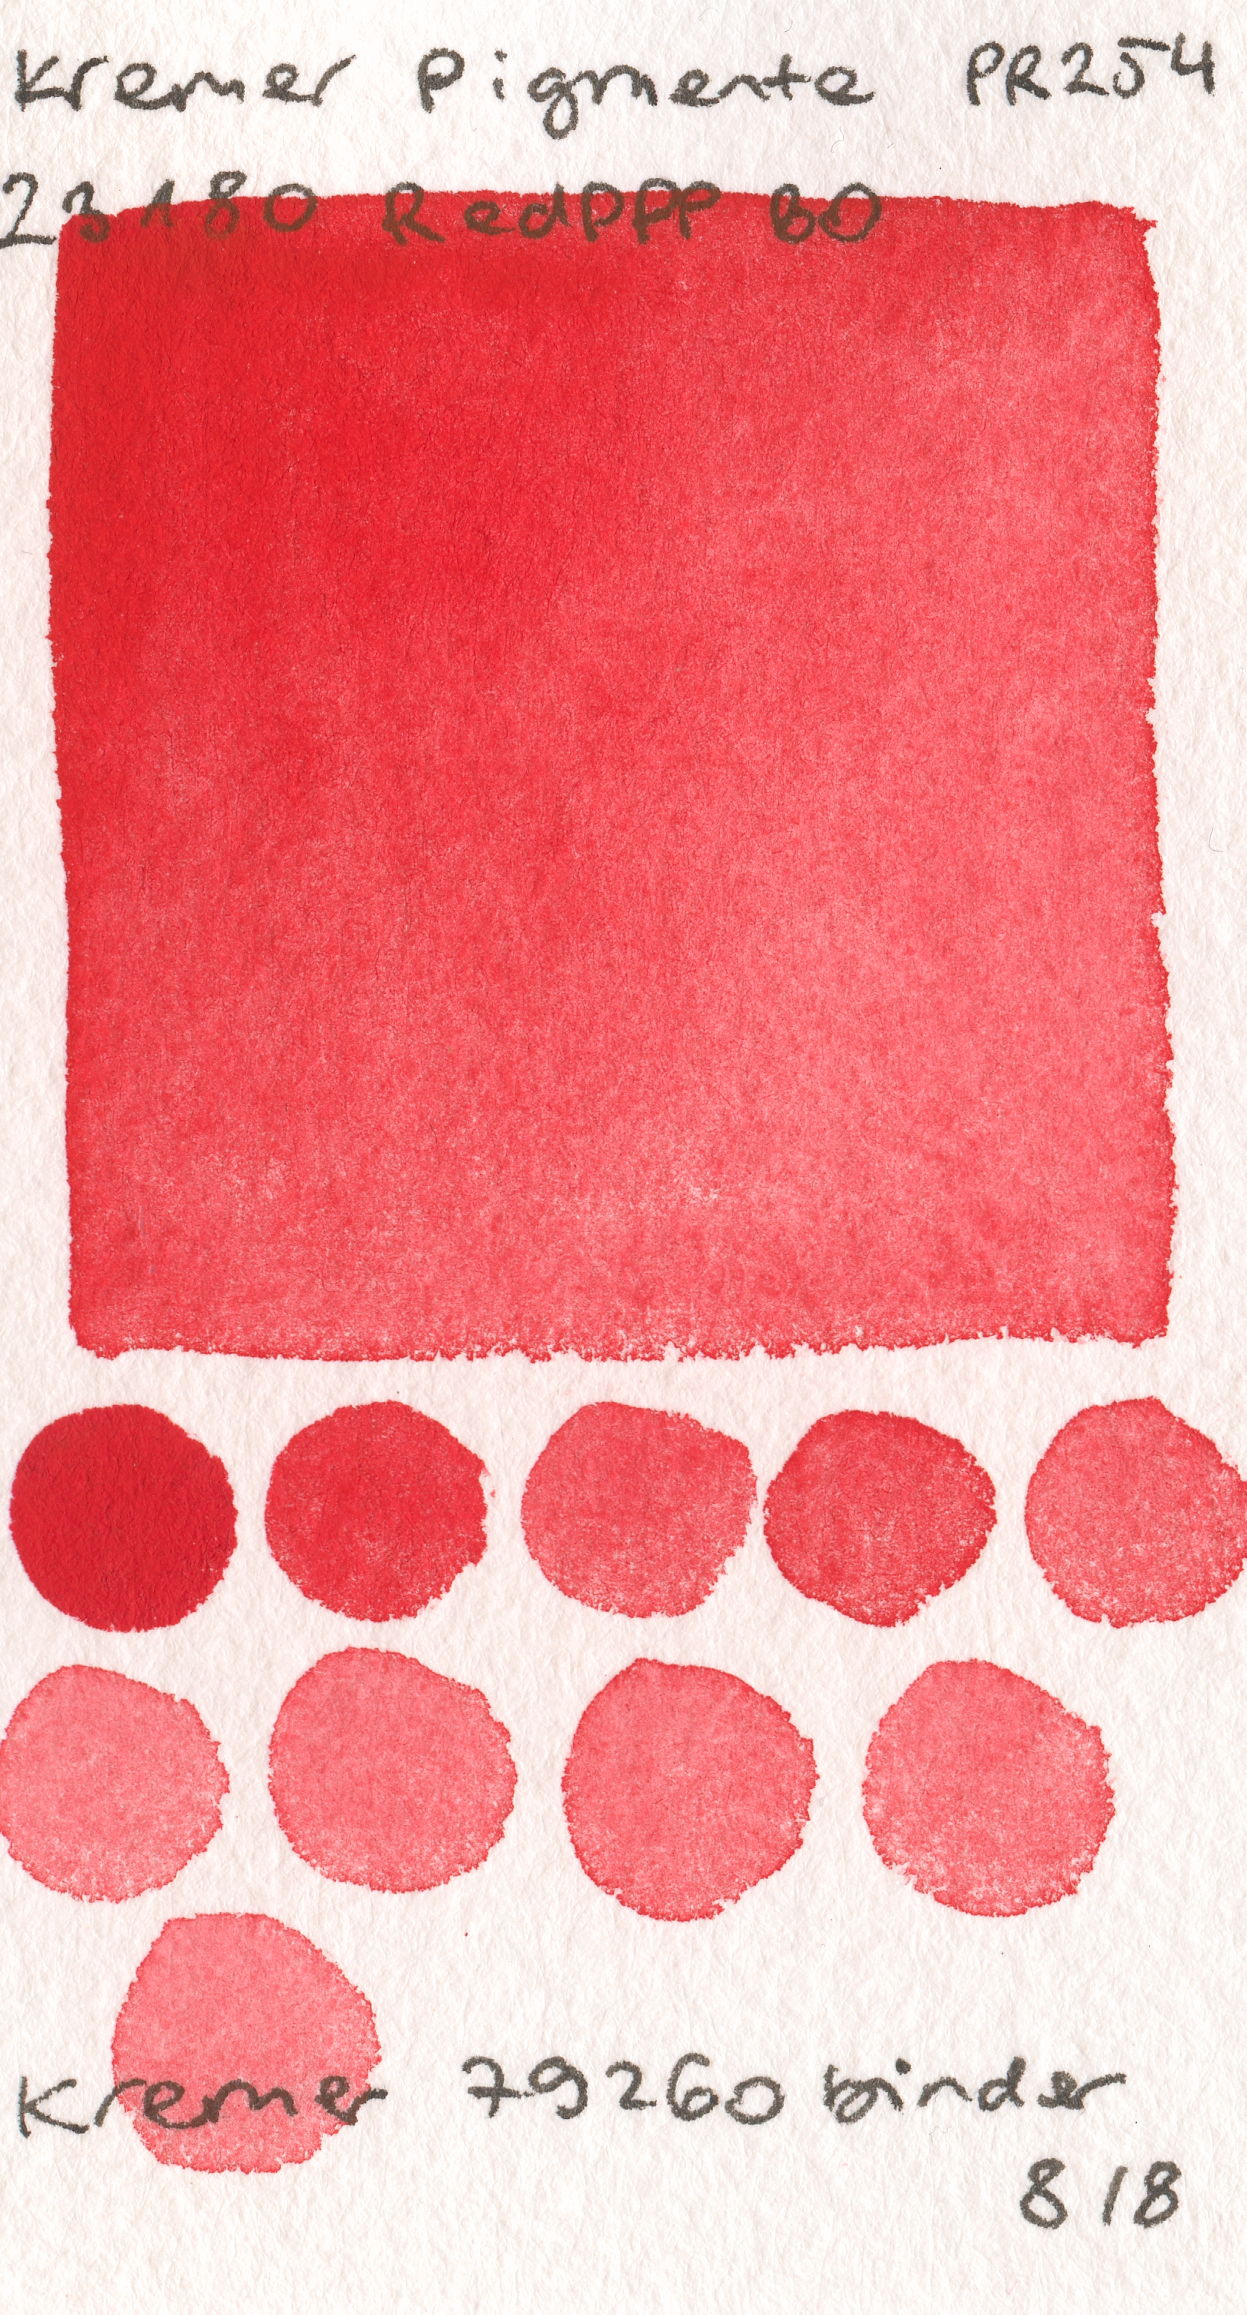 Kremer Pigmente [Dry] Pigments 23180 Red DPP BO PR254 watercolor swatch